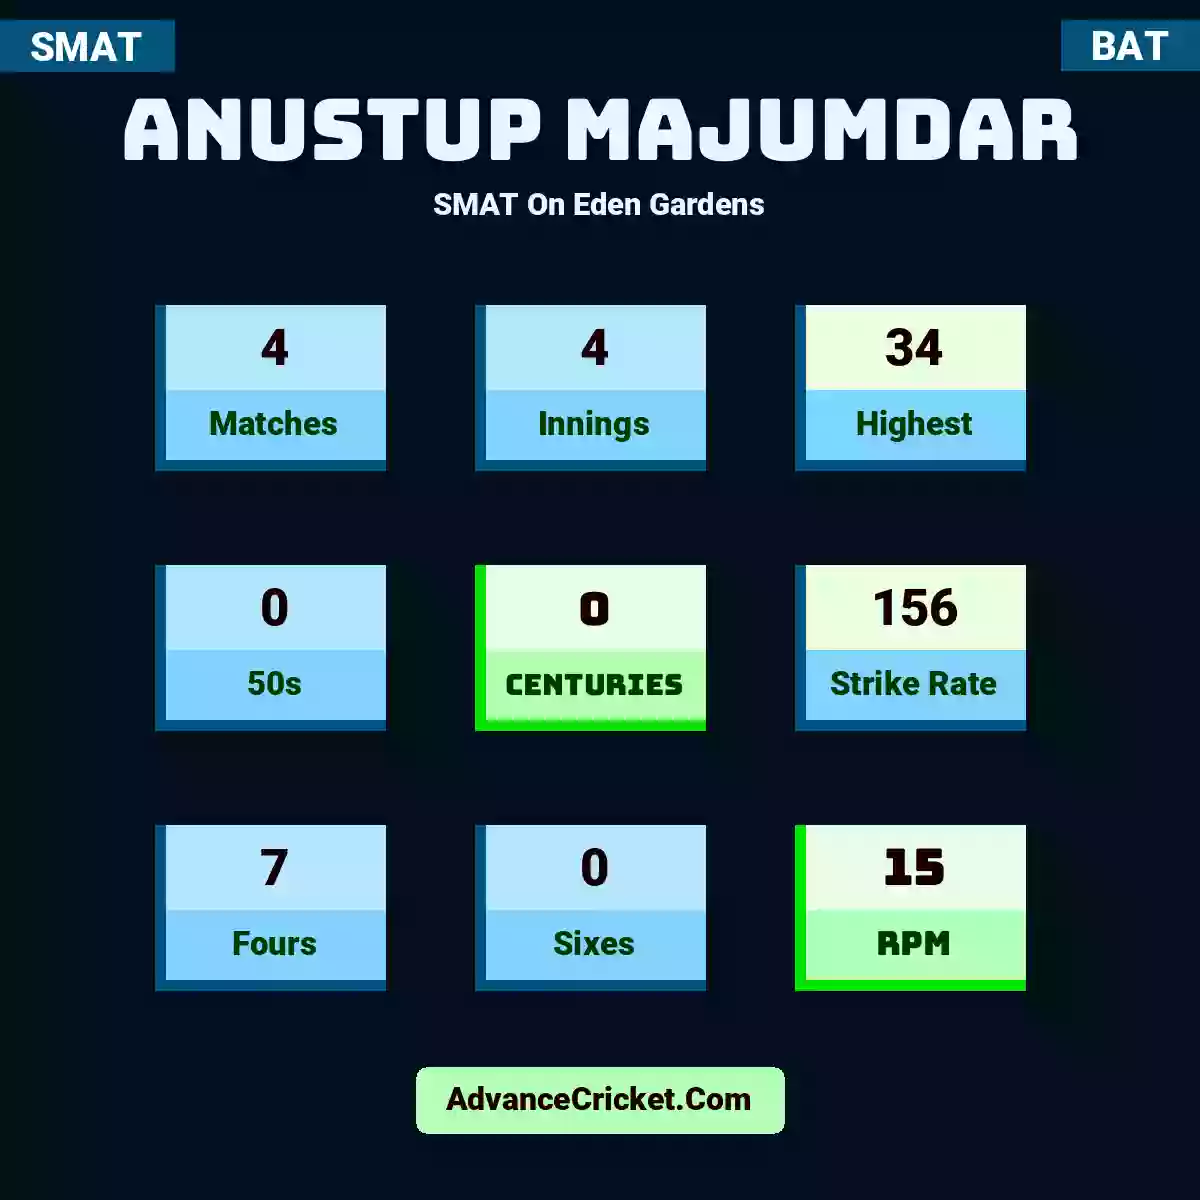 Anustup Majumdar SMAT  On Eden Gardens, Anustup Majumdar played 4 matches, scored 34 runs as highest, 0 half-centuries, and 0 centuries, with a strike rate of 156. A.Majumdar hit 7 fours and 0 sixes, with an RPM of 15.